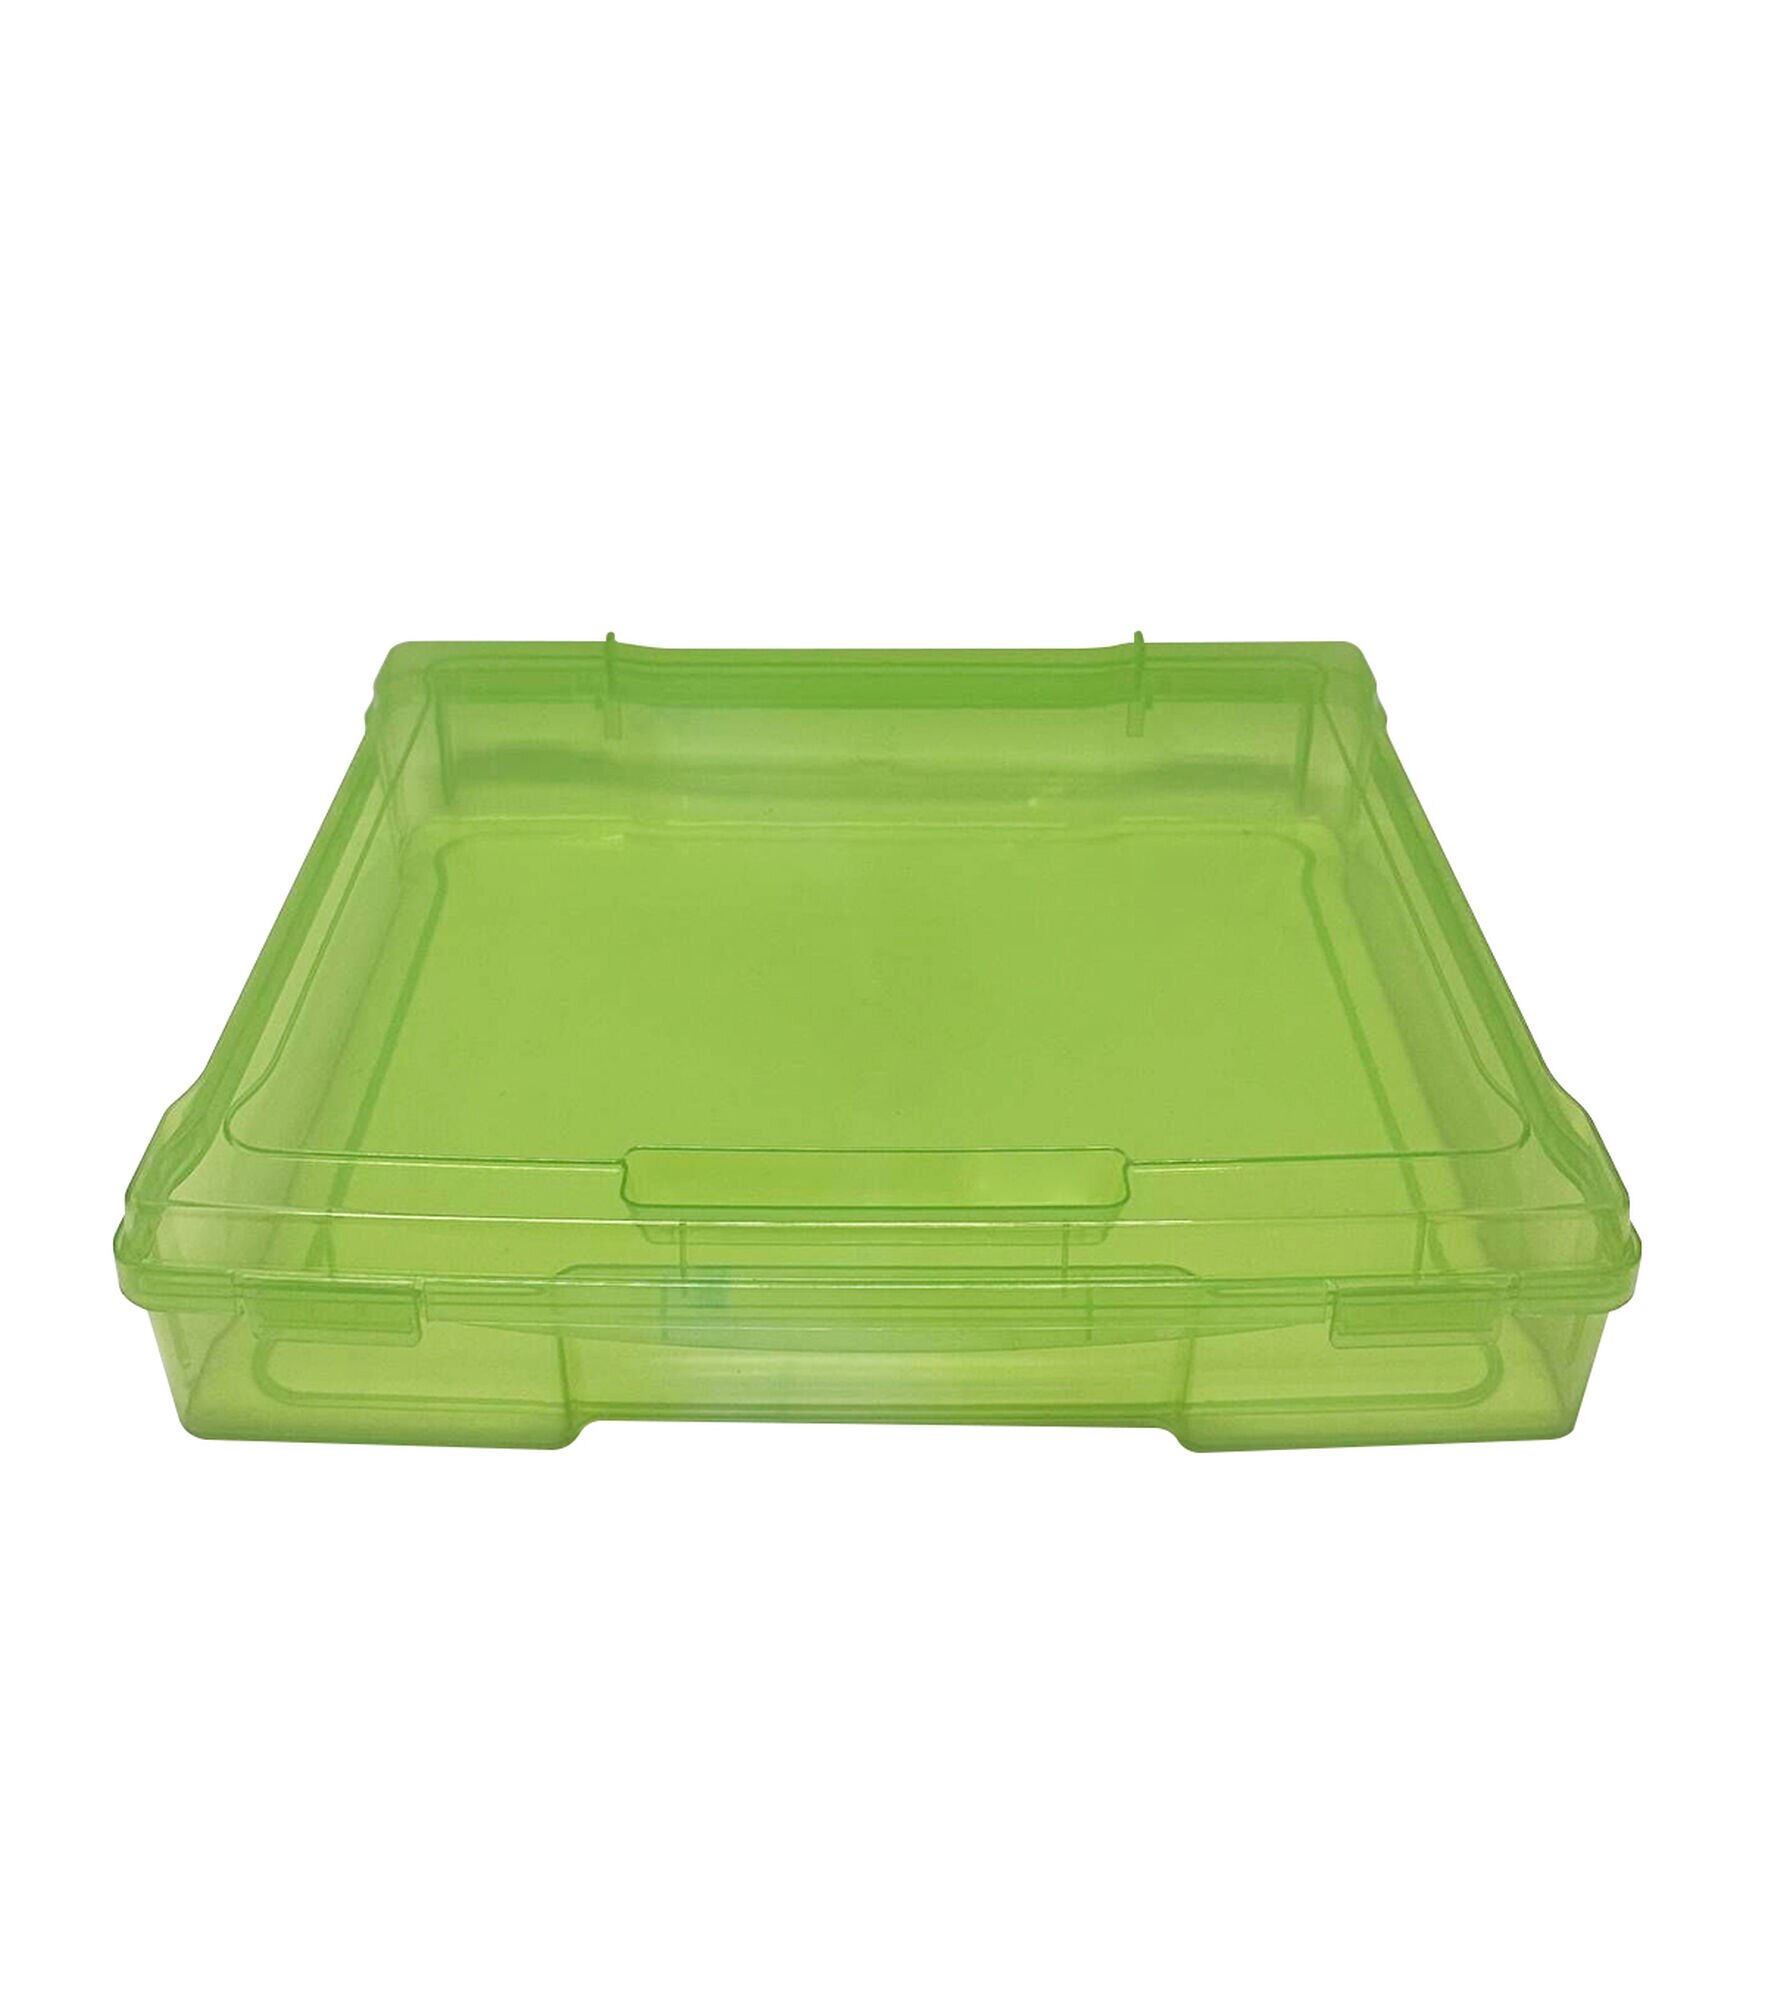 Top Notch 12 x 12 Plastic Scrapbook Storage Case - Green - Plastic Storage - Storage & Organization